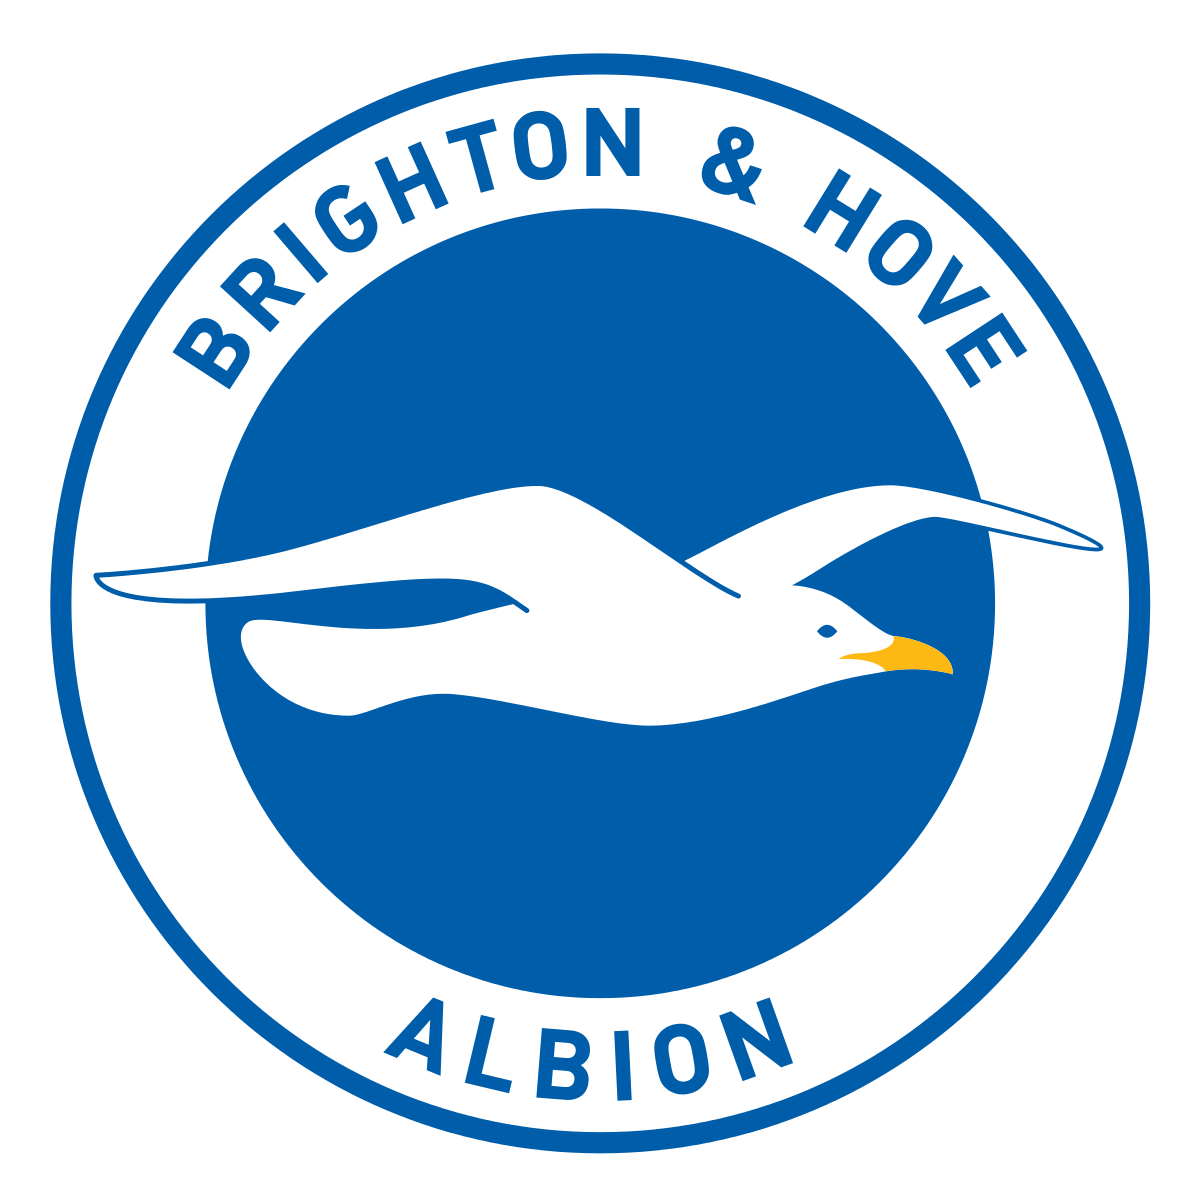 Brighton U-21 logo